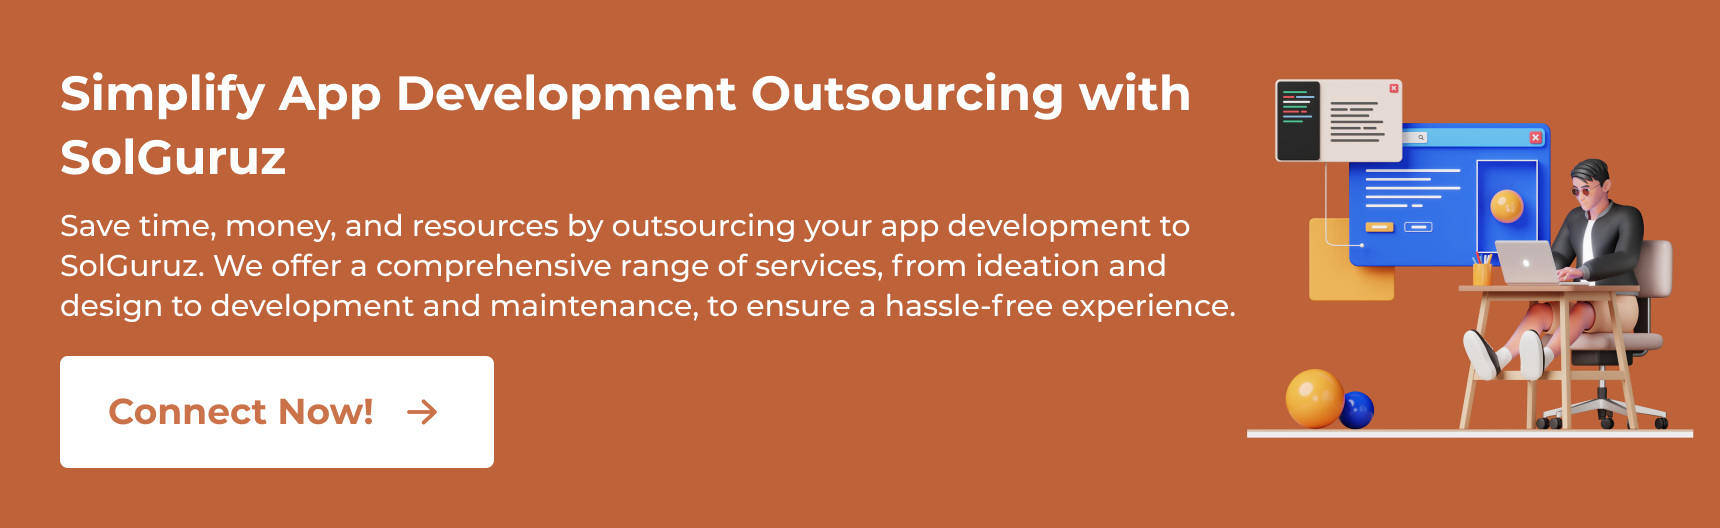 Simplify App Development Outsourcing with SolGuruz